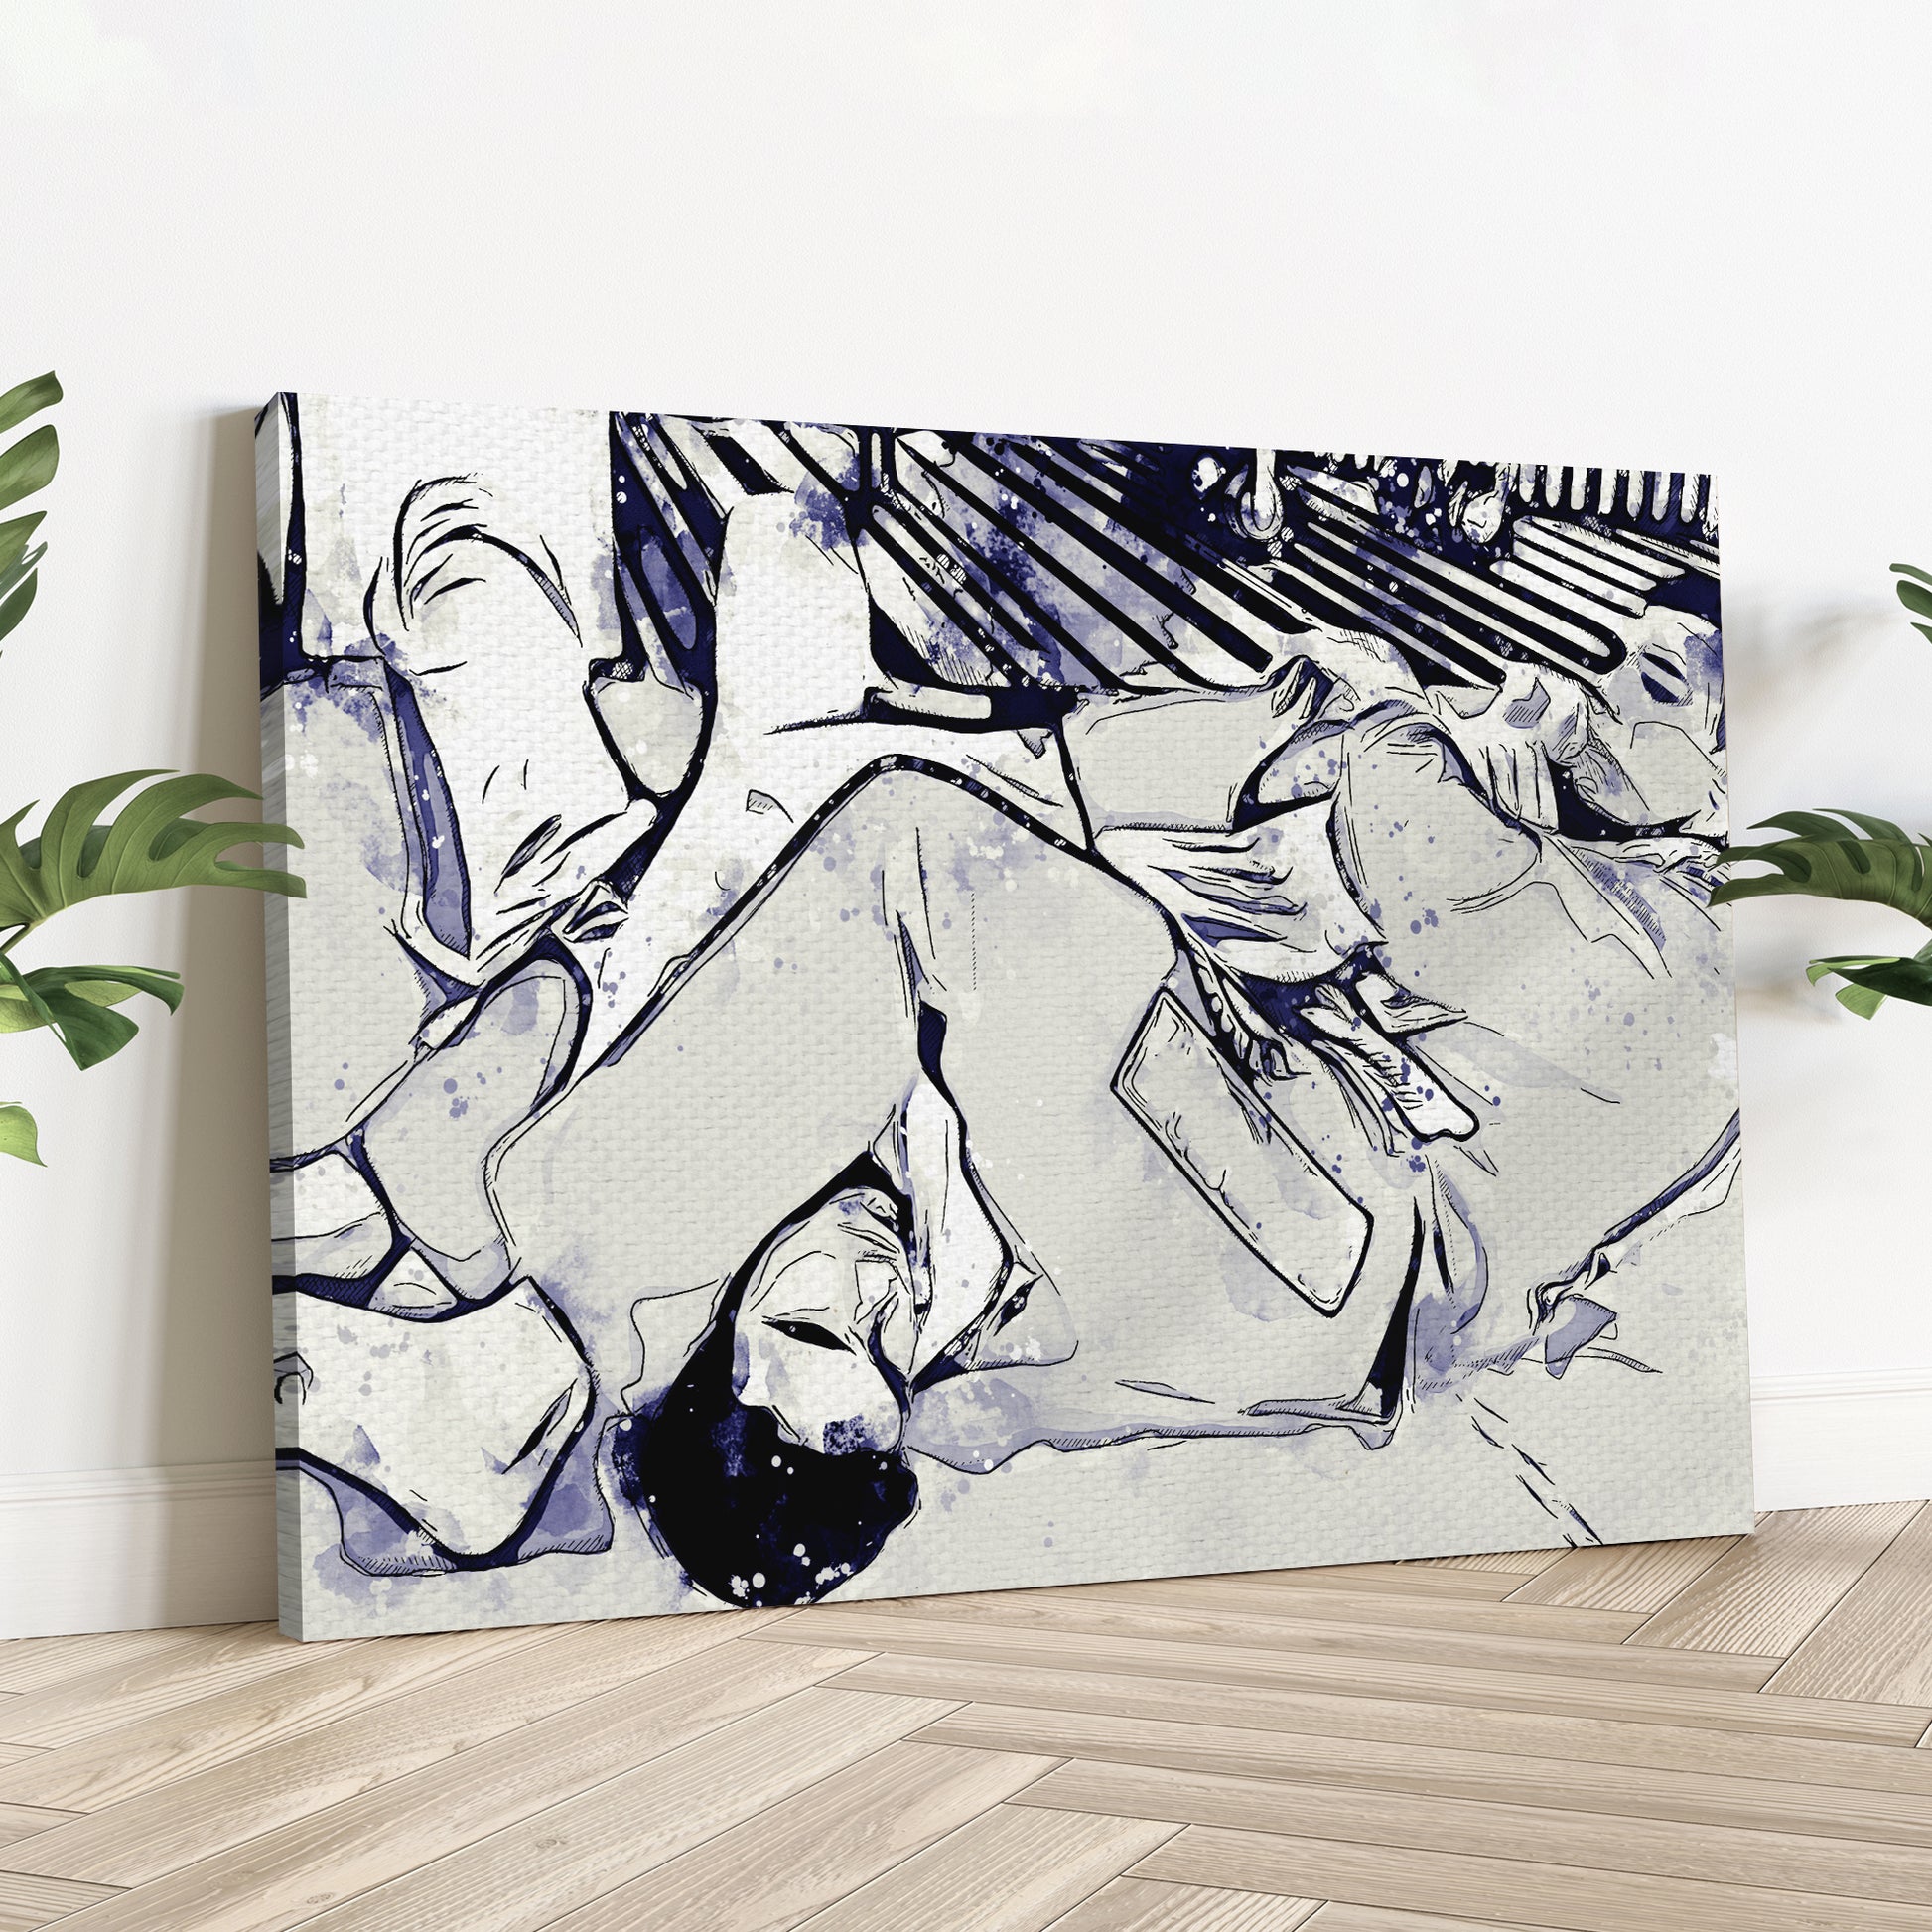 Jiu-Jitsu Armbar Move Canvas Wall Art Style 2 - Image by Tailored Canvases